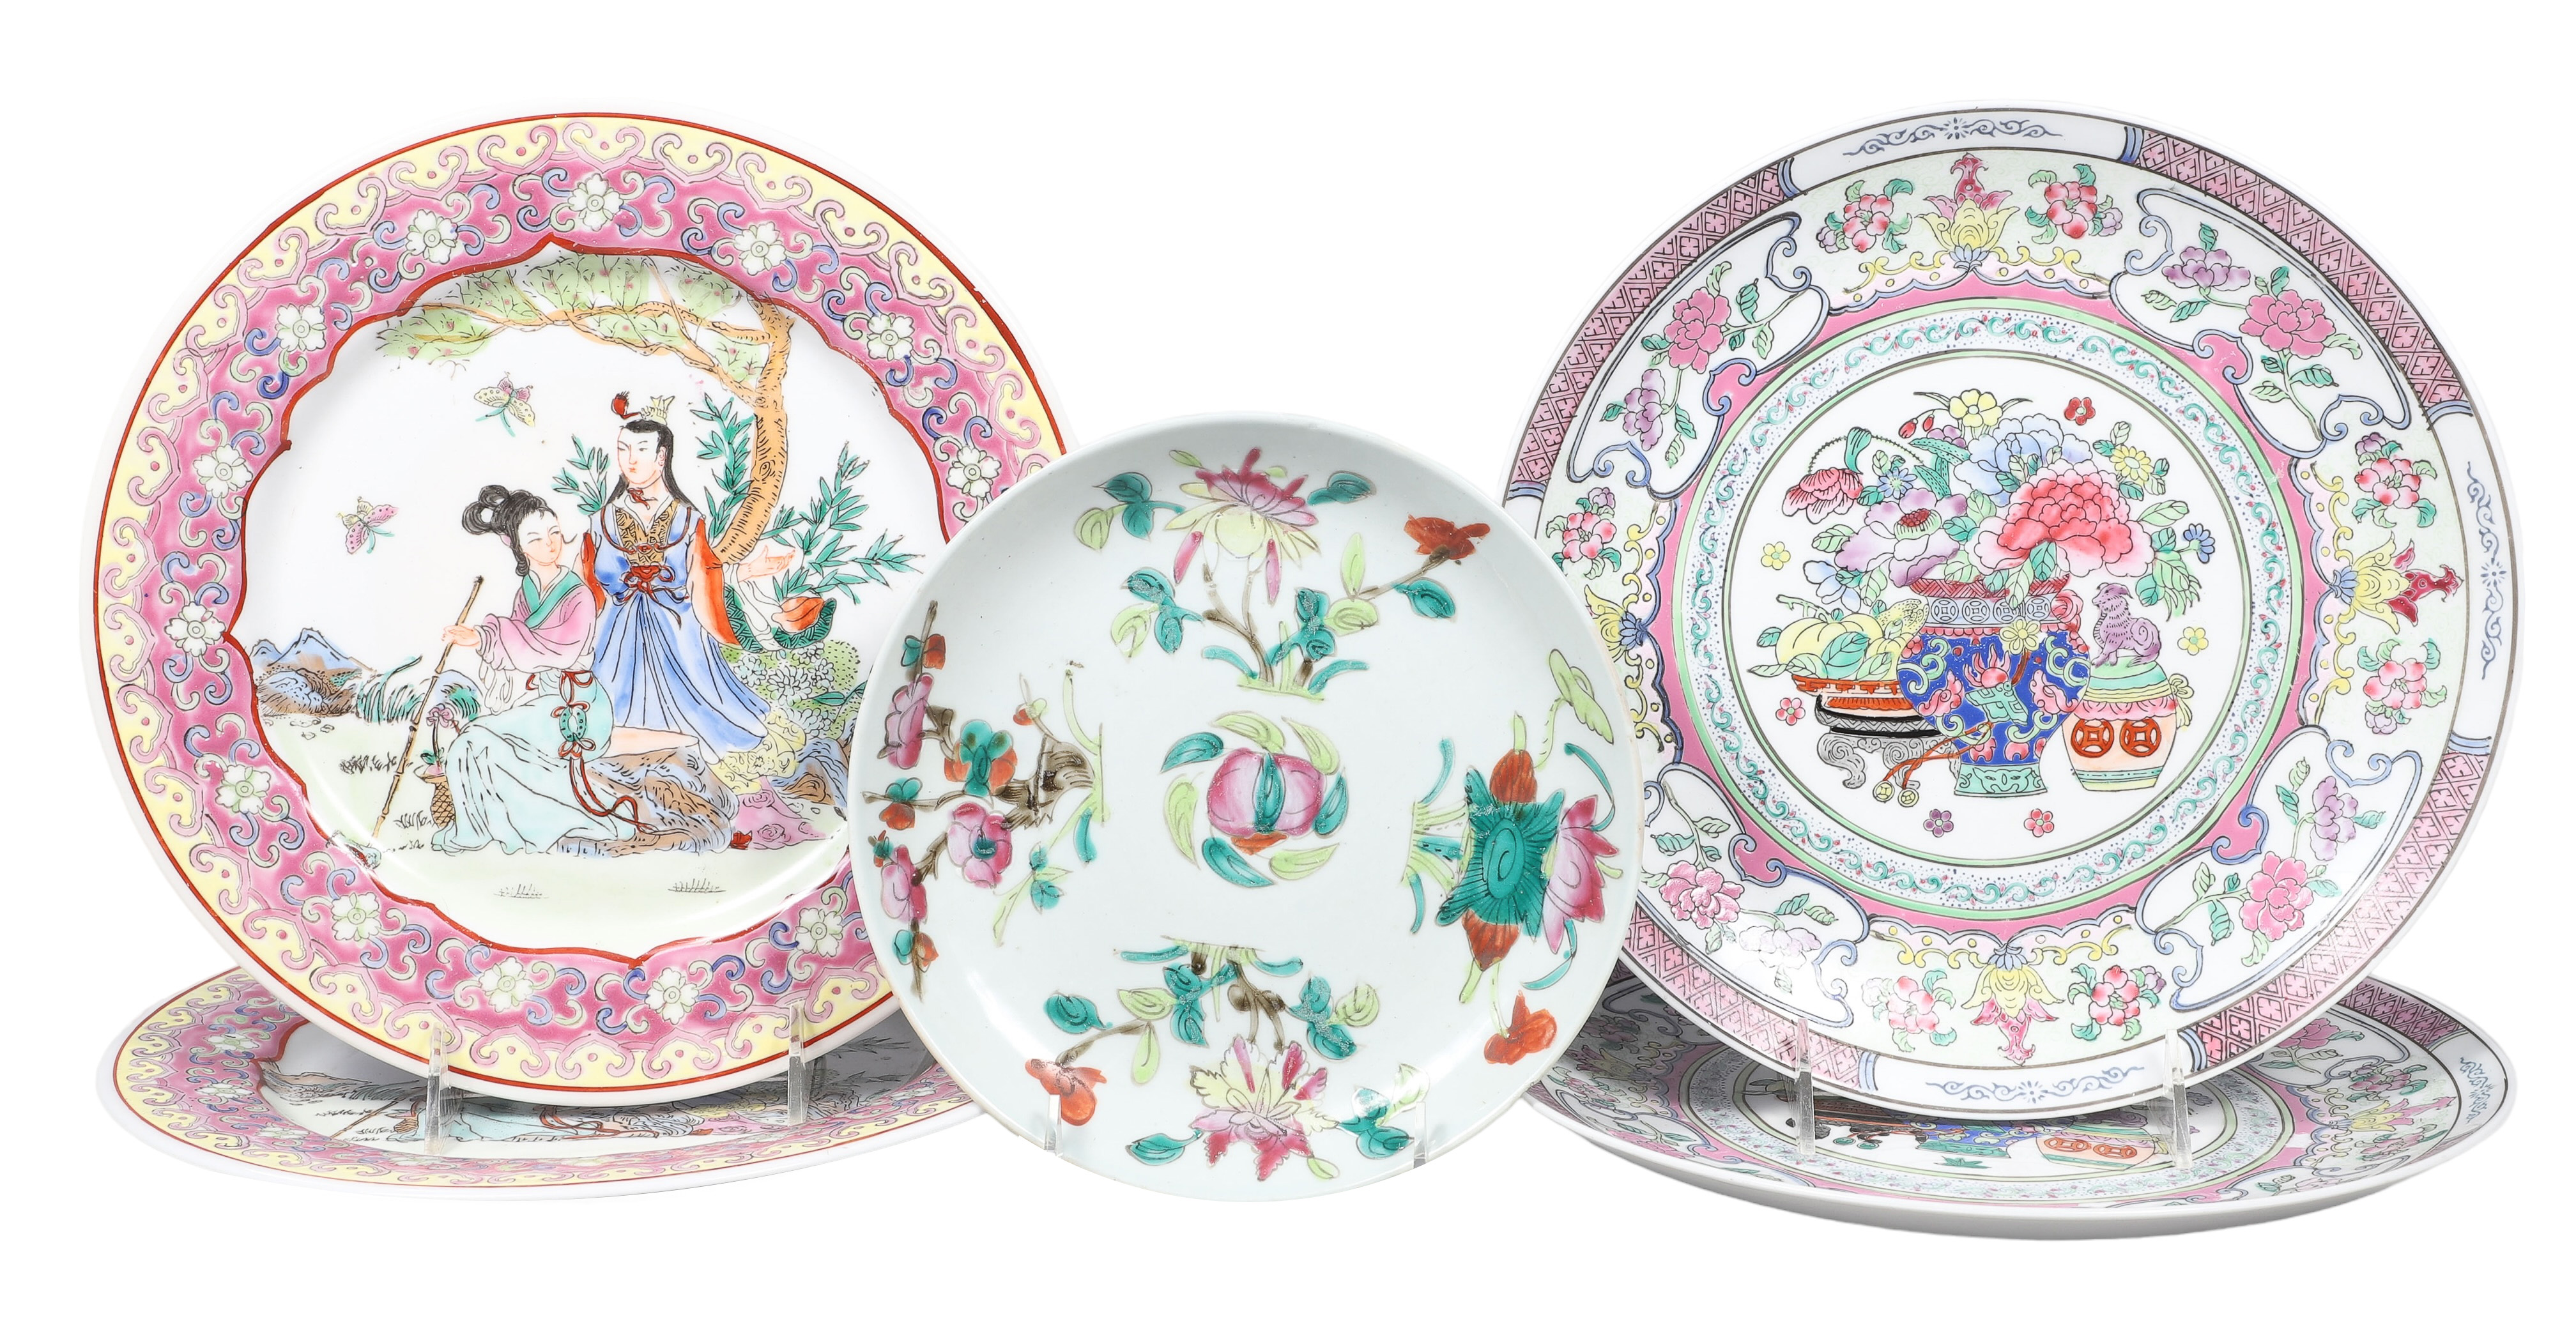  5 Chinese porcelain plates c o 2e1b4a